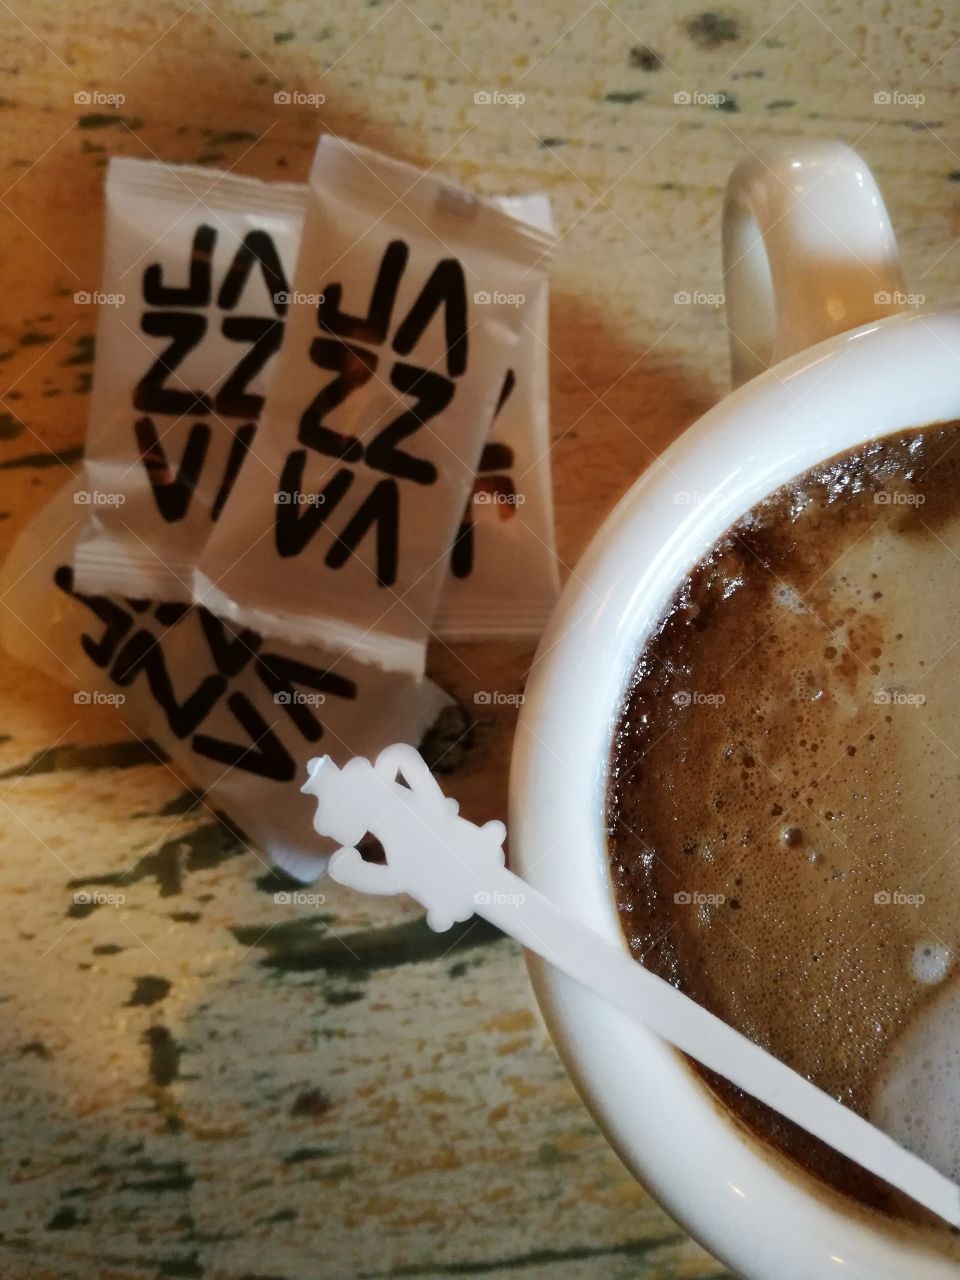 Coffee latte espresso with sugar